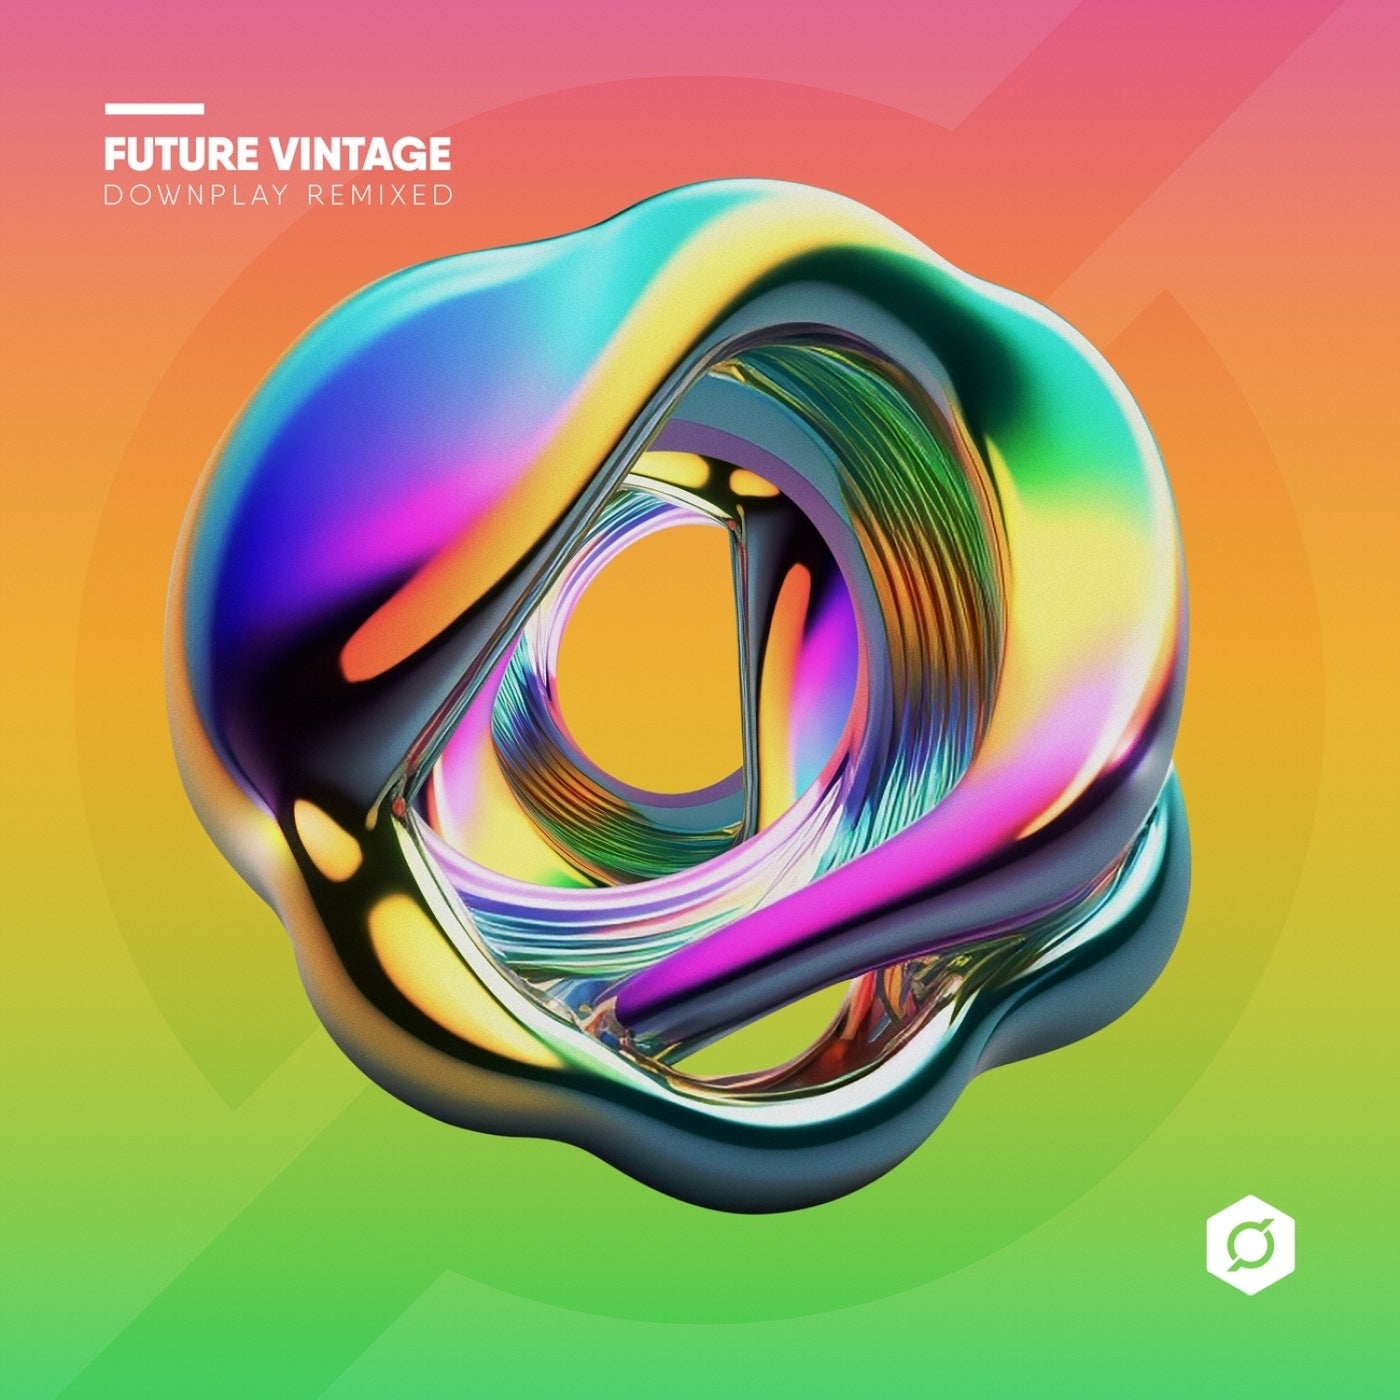 Future Vintage: Downplay Remixed